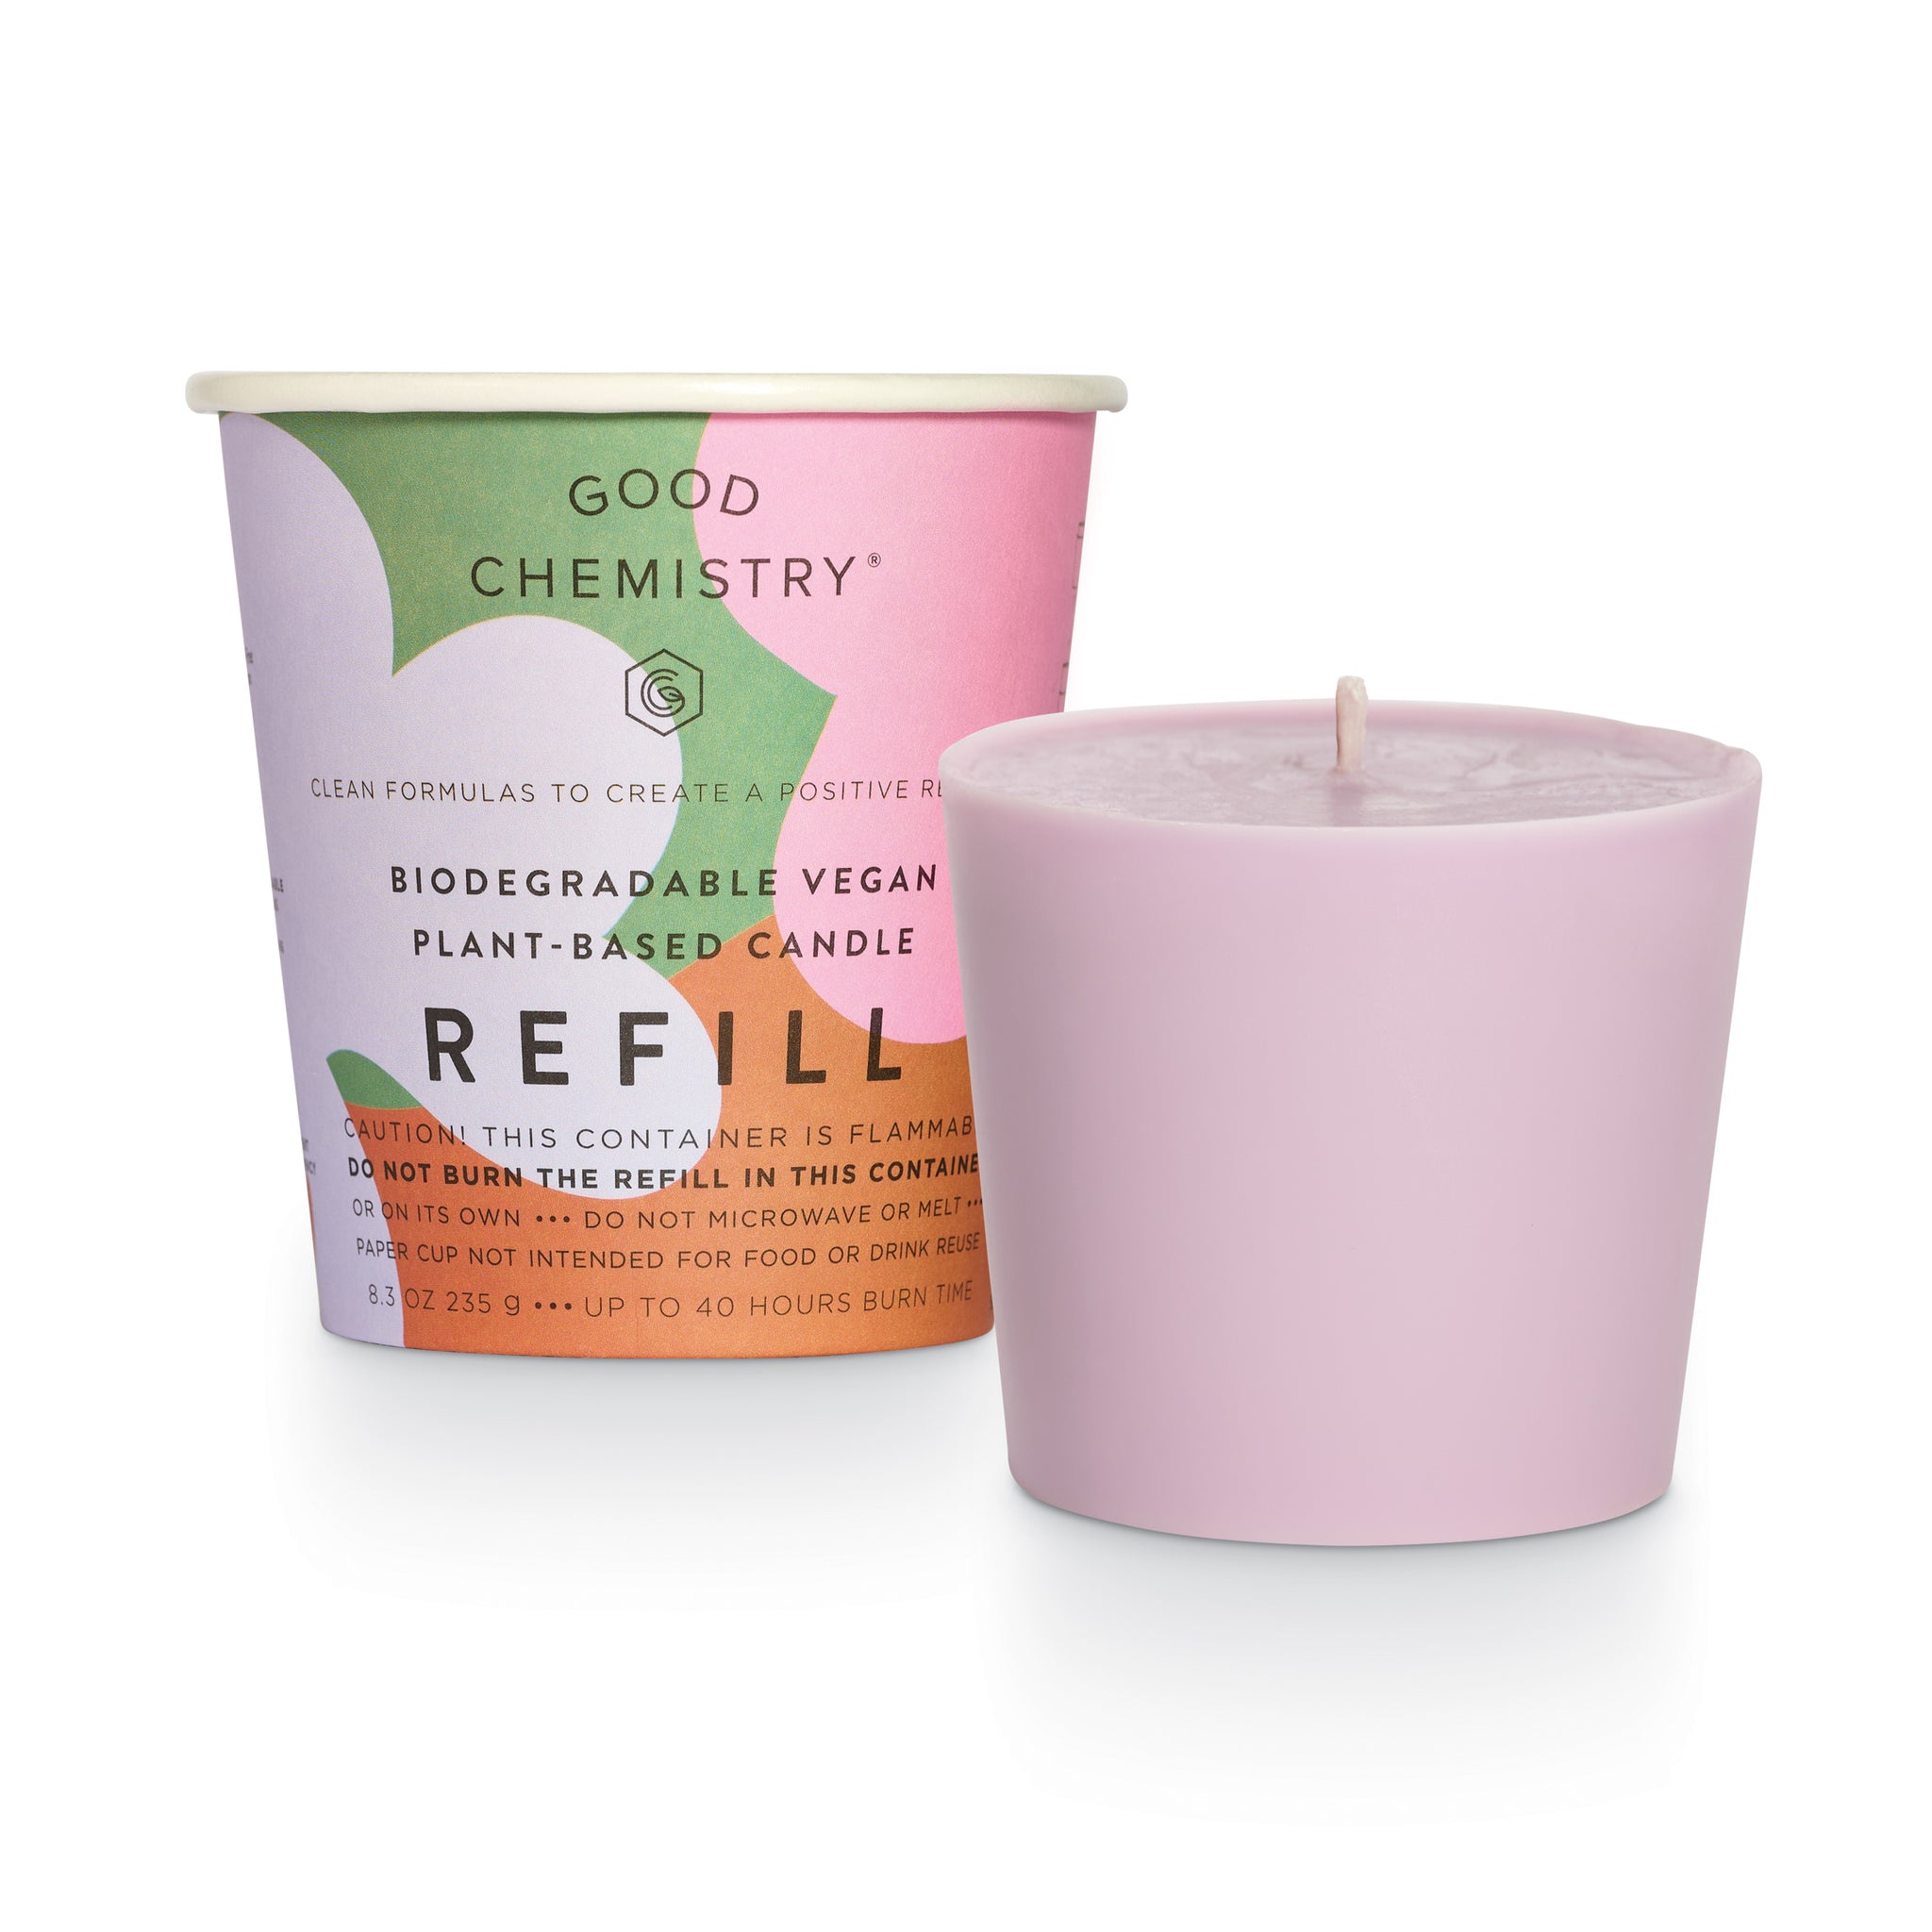 Lavender + Ooh La La Plant-Based Candle Refill Kit